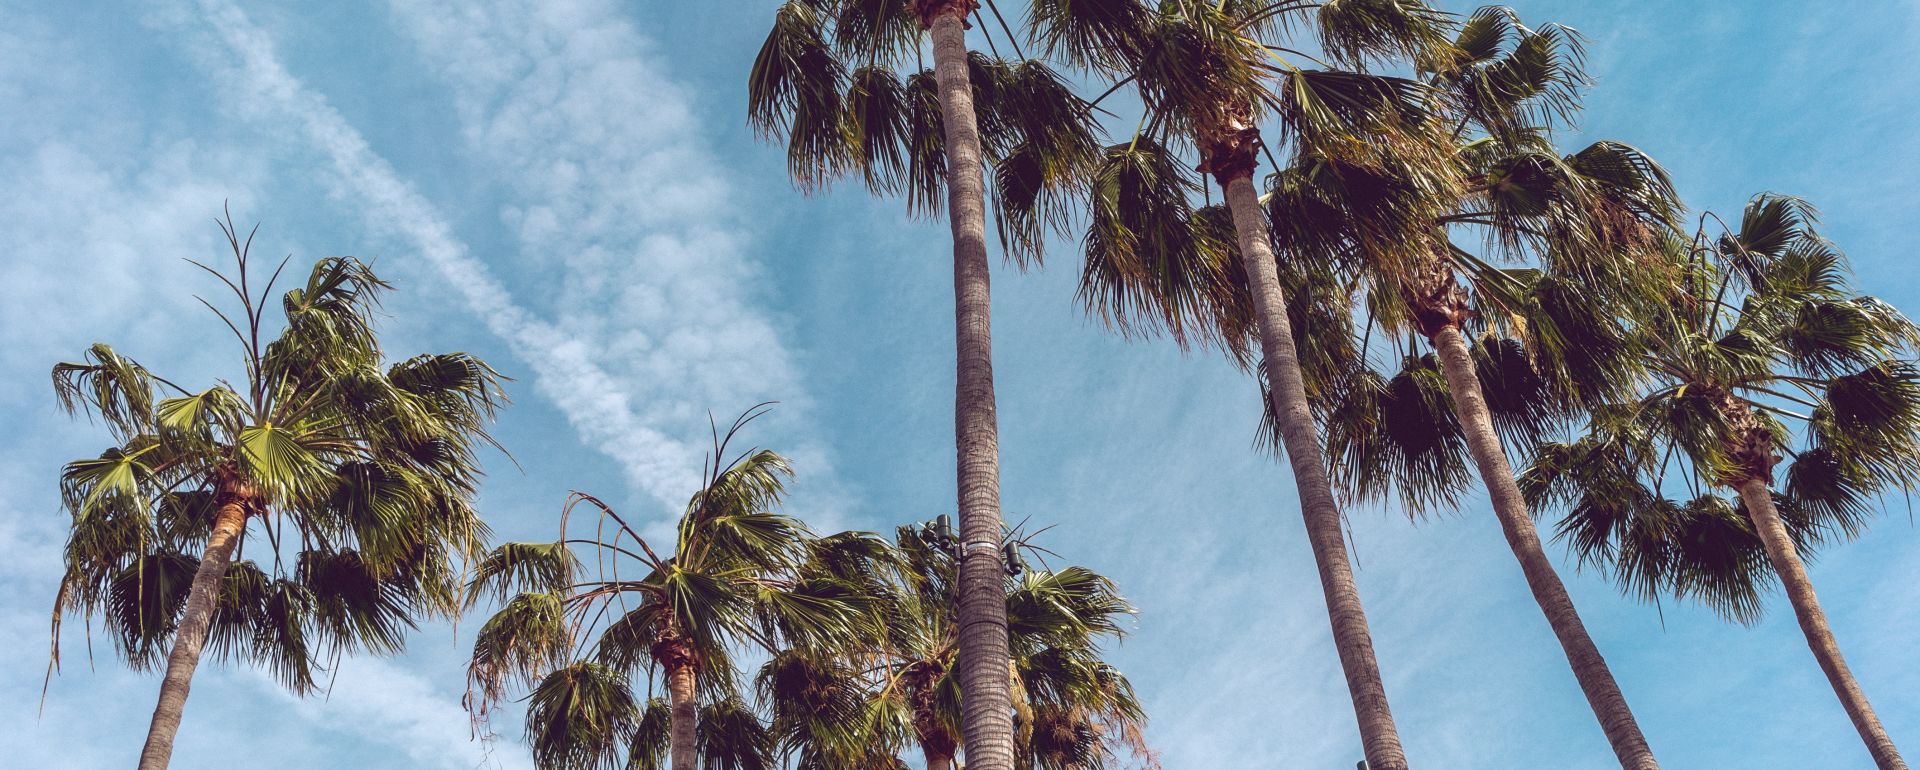 Palm Trees in Anaheim California